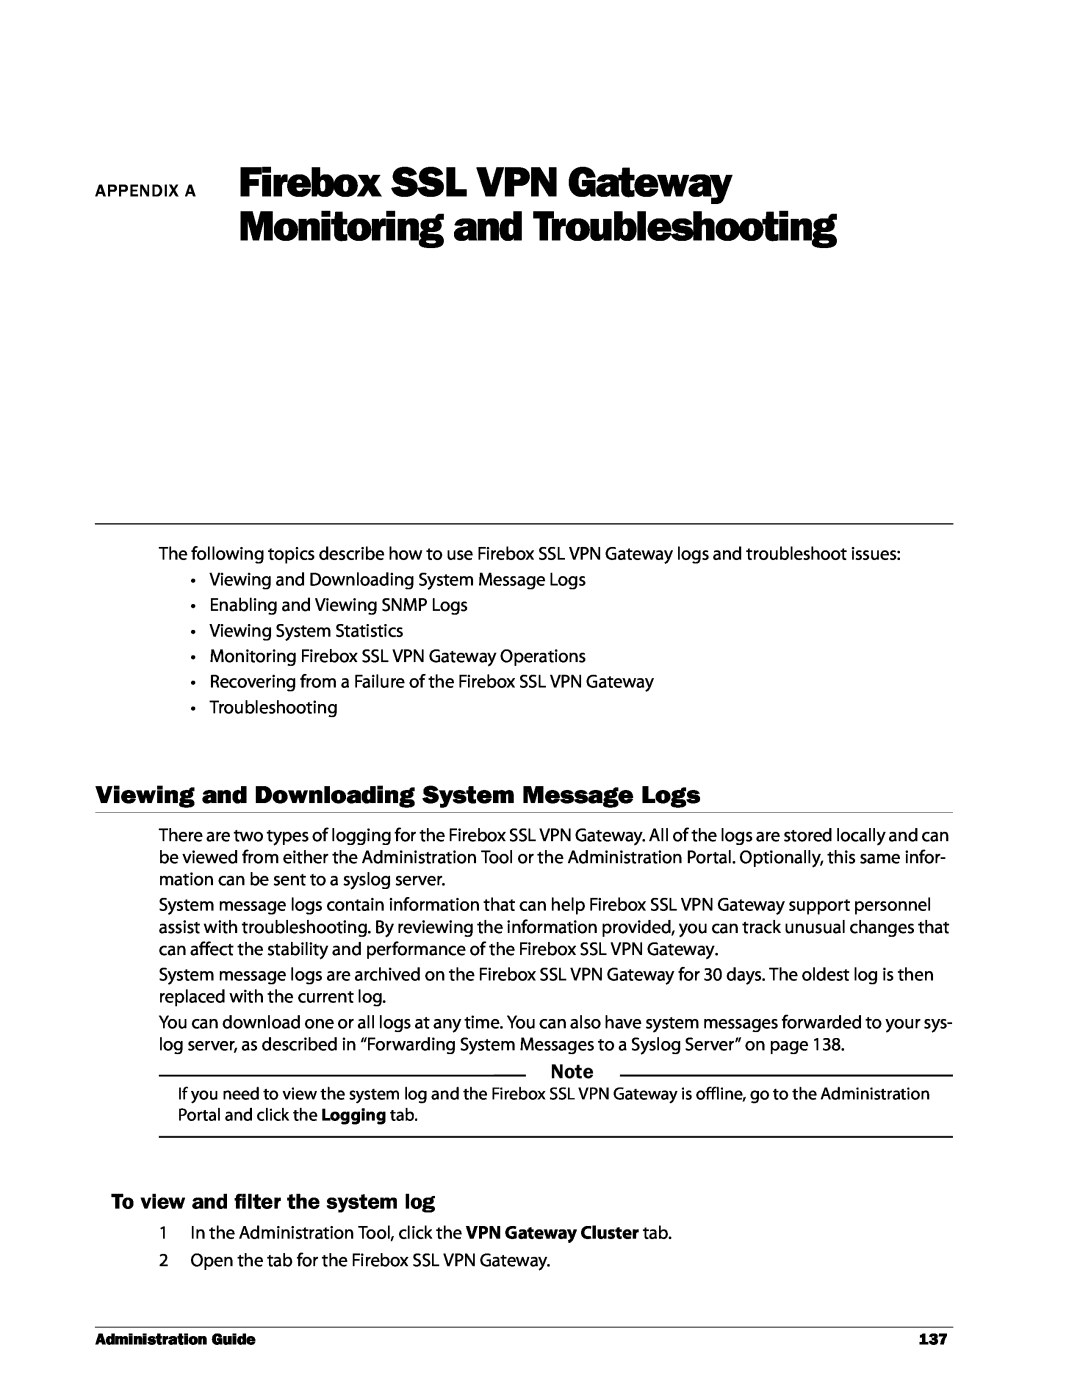 WatchGuard Technologies manual APPENDIX A Firebox SSL VPN Gateway, Monitoring and Troubleshooting 